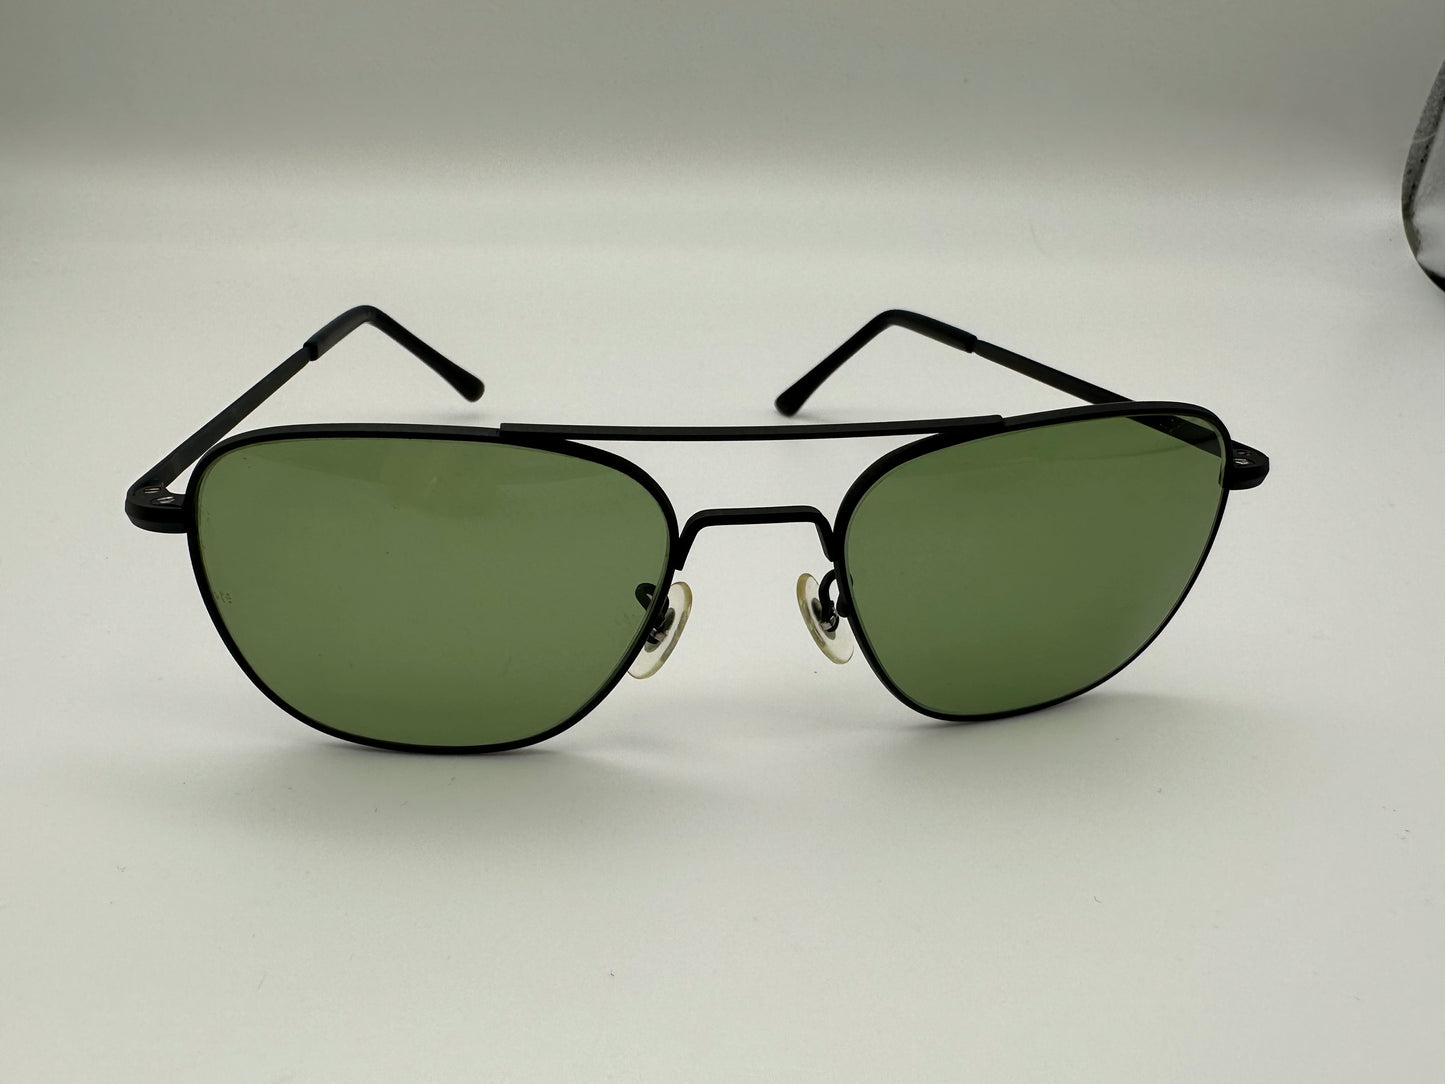 Rare Vintage Randolph Engineering 1990s 55mm matte Black Green sunglasses